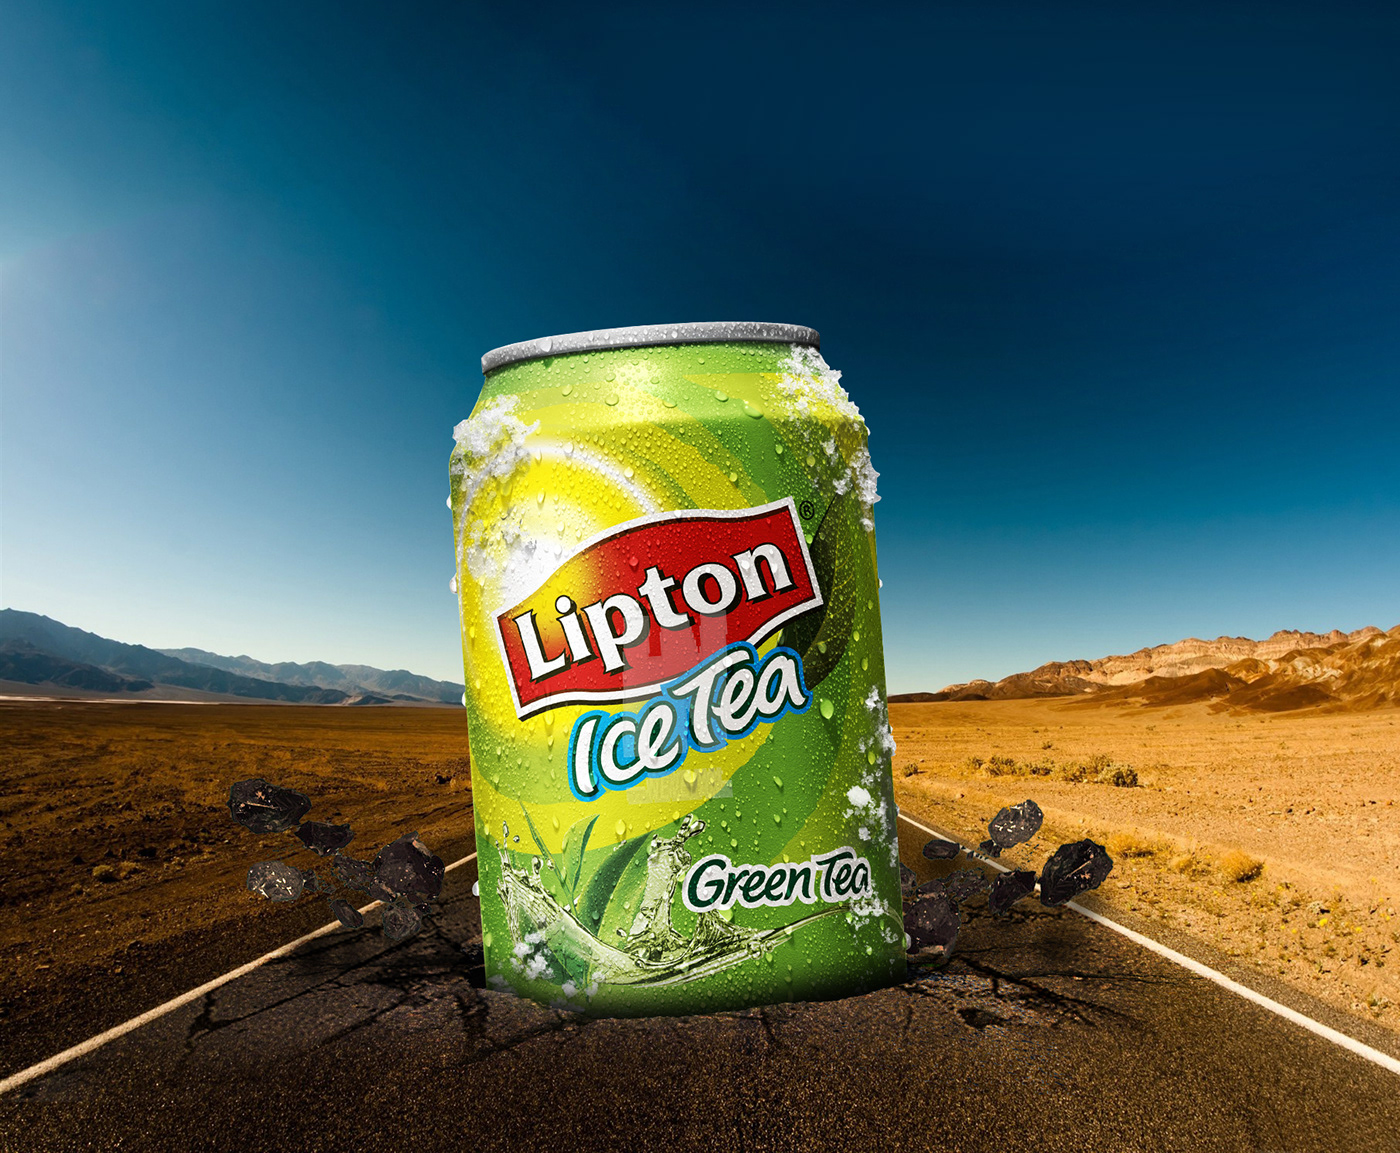 Картинки липтона. Липтон Ice Tea. Lipton Ice Tea зеленый. Липтон Ice Tea реклама. Красивый Липтон.